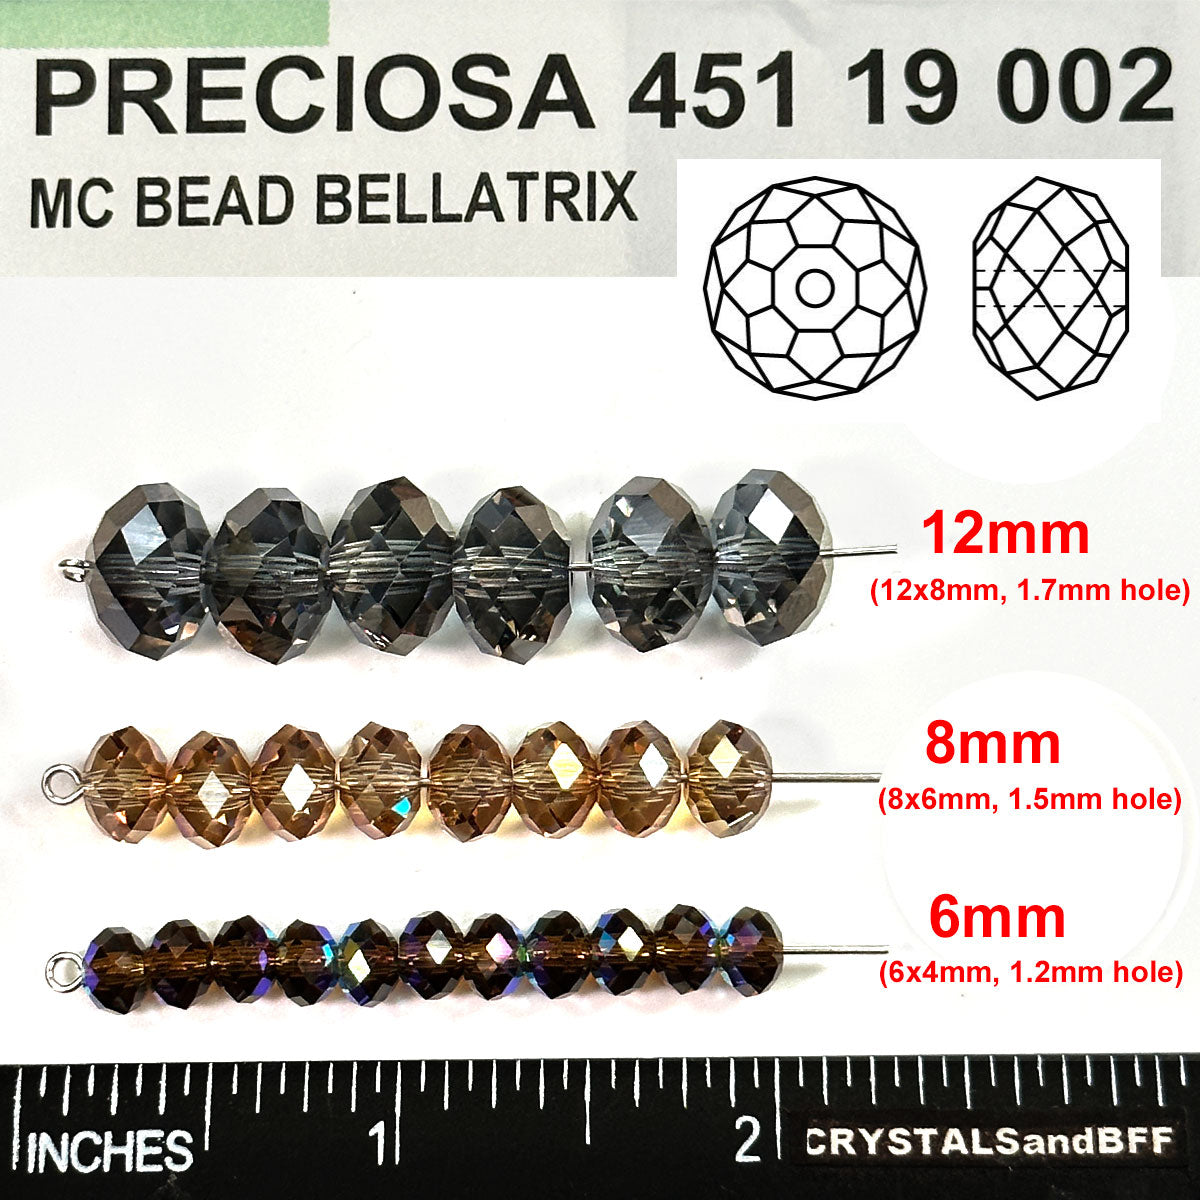 Jet Light Hematite Fully coated, Czech Machine Cut Bellatrix Crystal Beads, Preciosa 451-19-002, 6mm, 36pcs, dark silver hematite spacer beads, #5040 Briolette cut